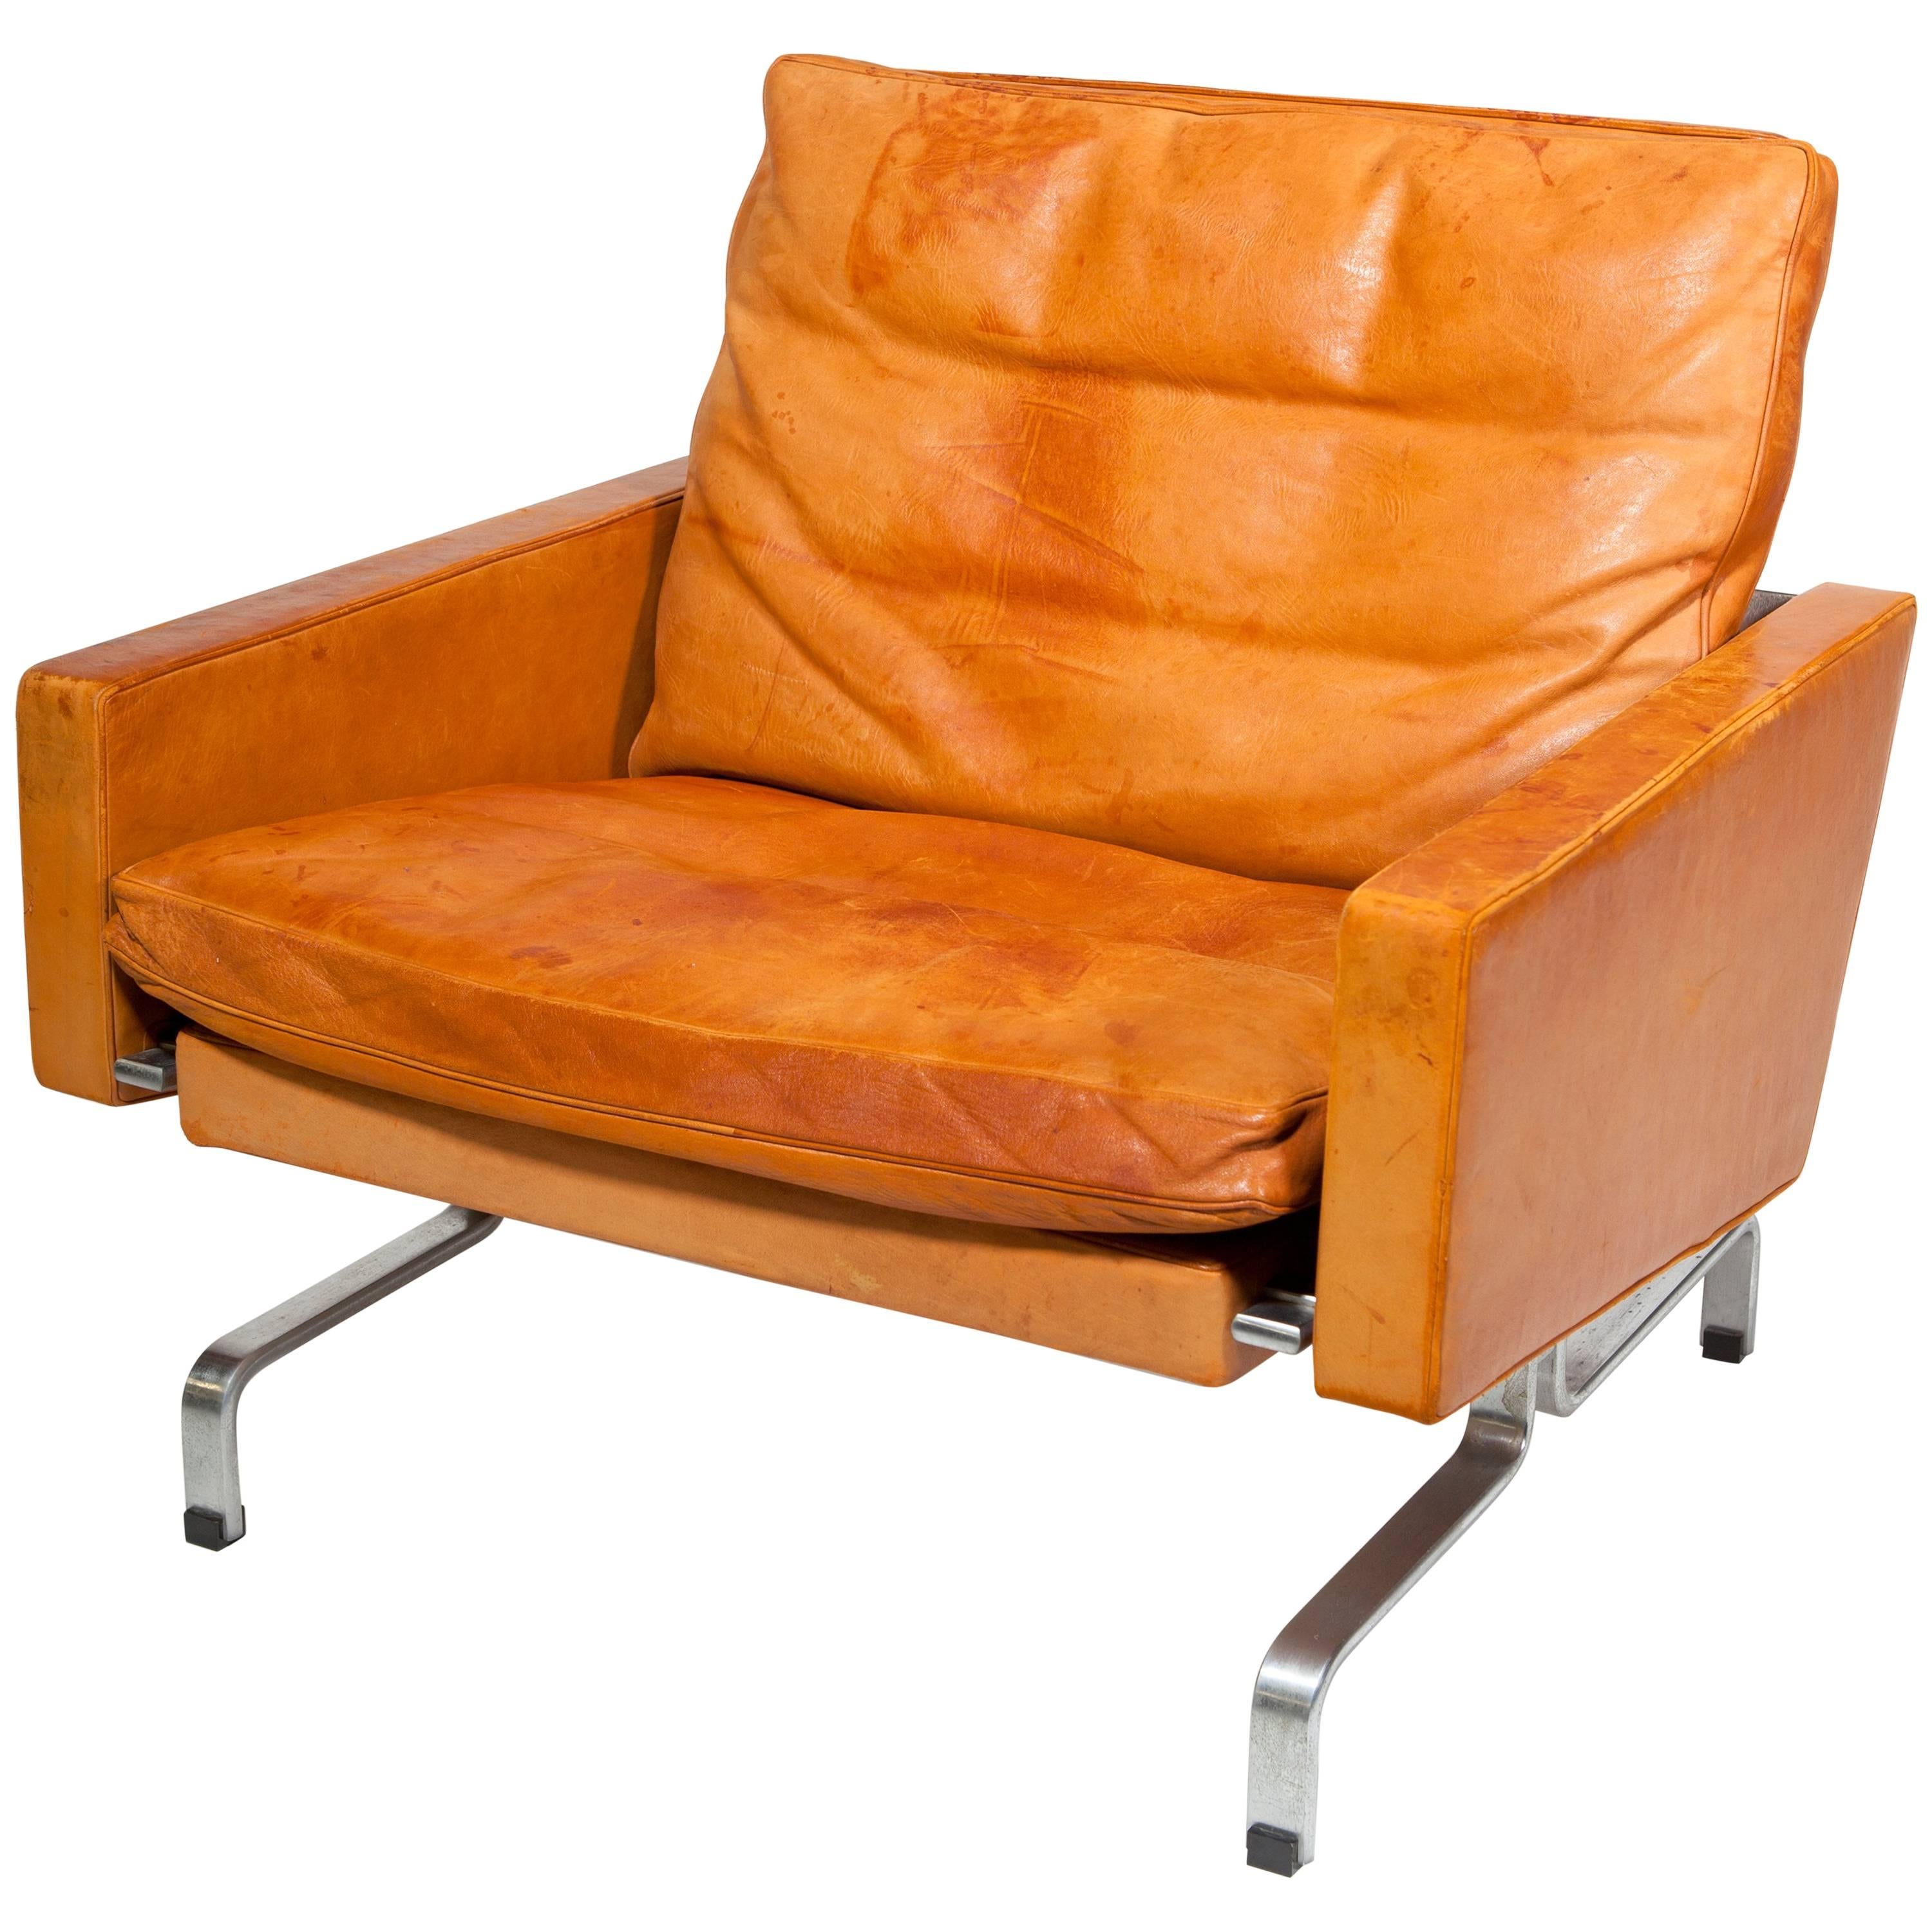 Poul Kjaerholm, Leather Chair, Pk31/1, Executed by E. Kold Christensen